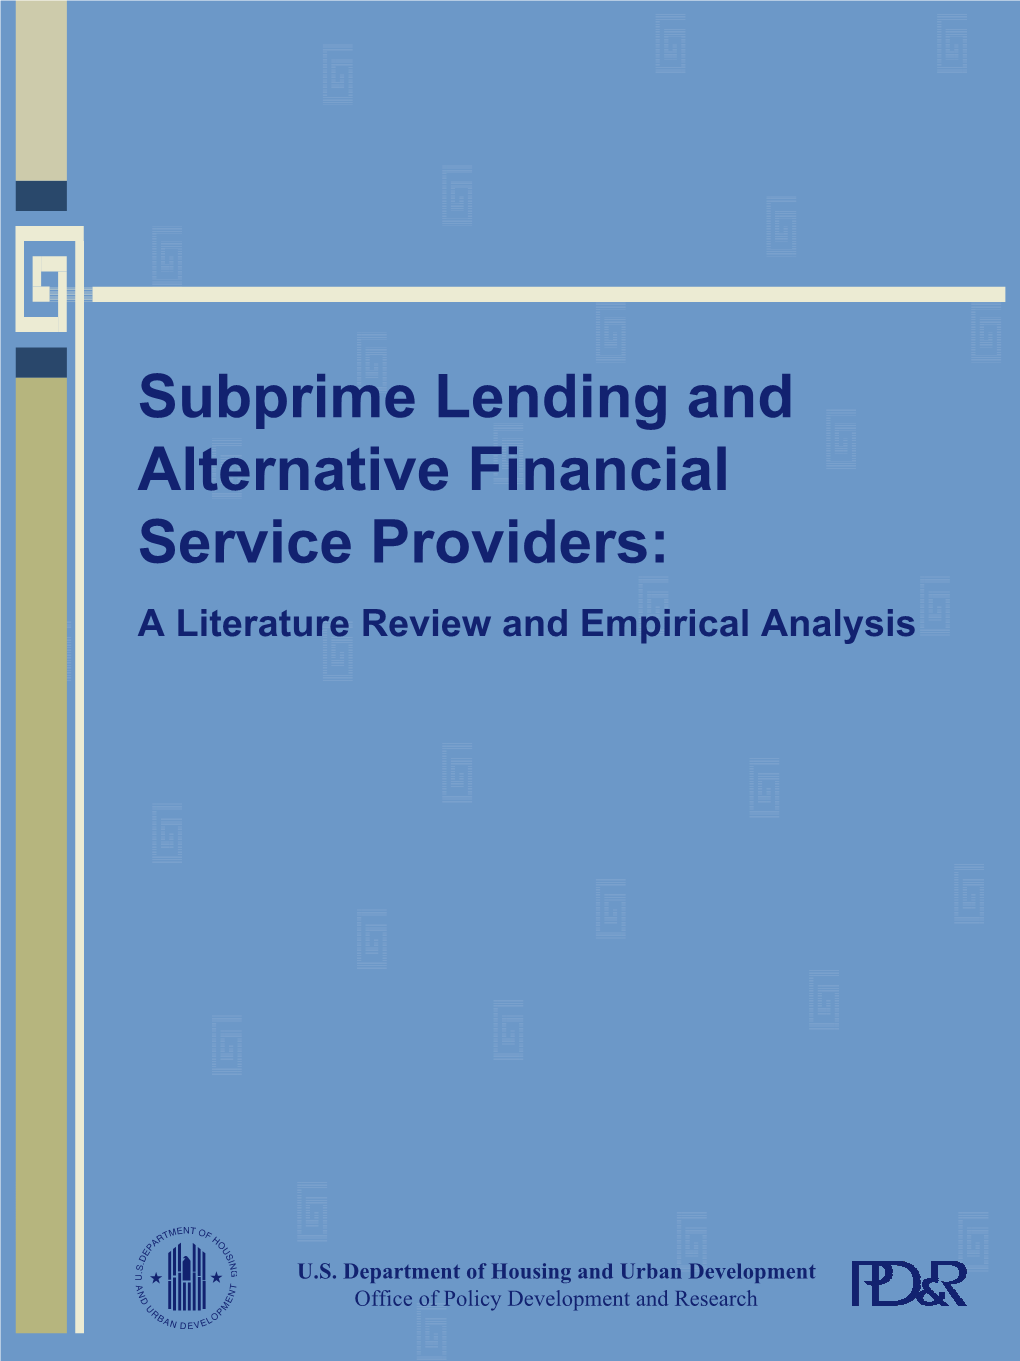 Subprime Lending and Alternative Financial Services Provider